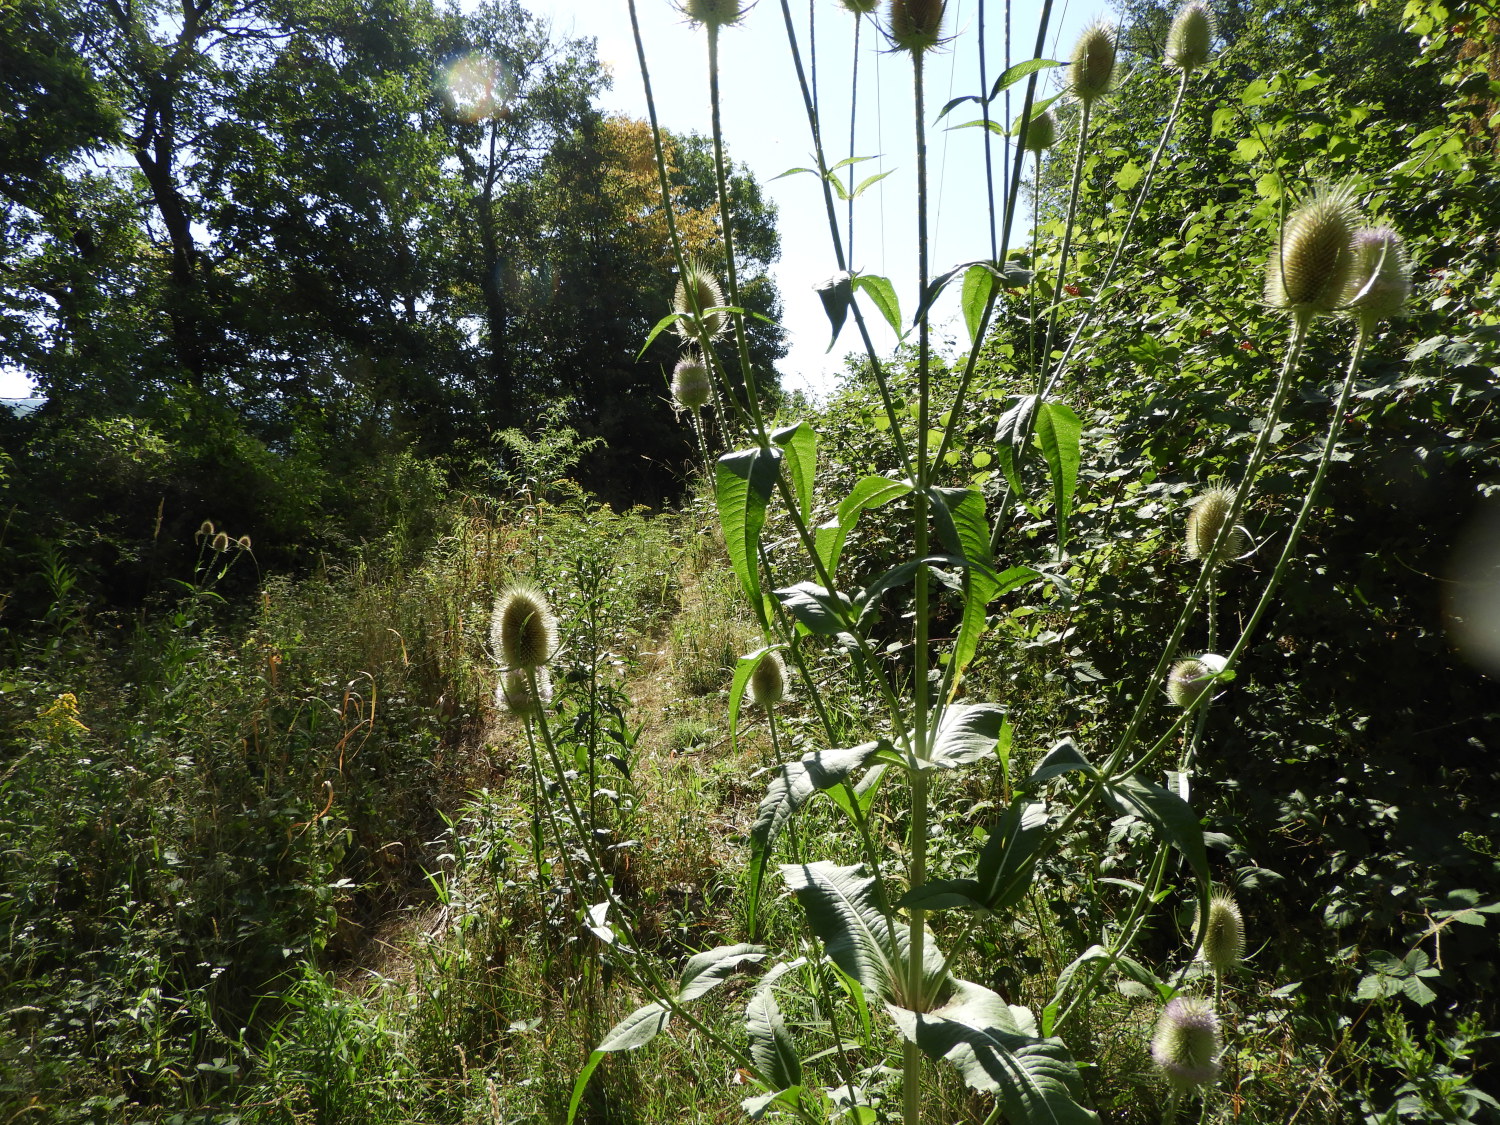 Overgrown pathway